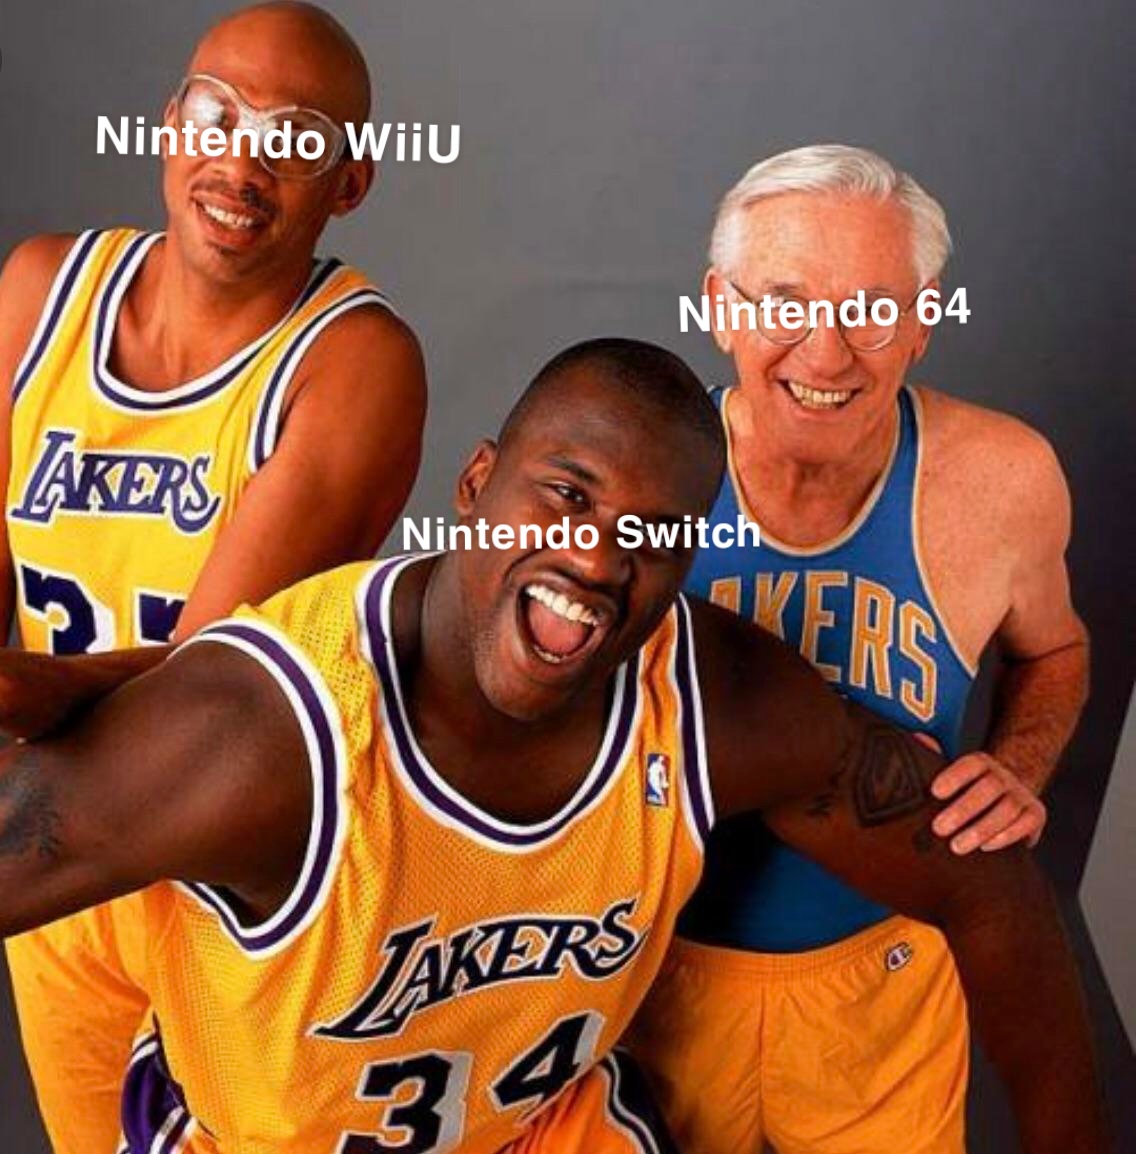 dank memes- nintendo memes - nba george mikan - Nintendo WiiU Nintendo 64 Lakers Nintendo Switch Avers Jakers 4 3